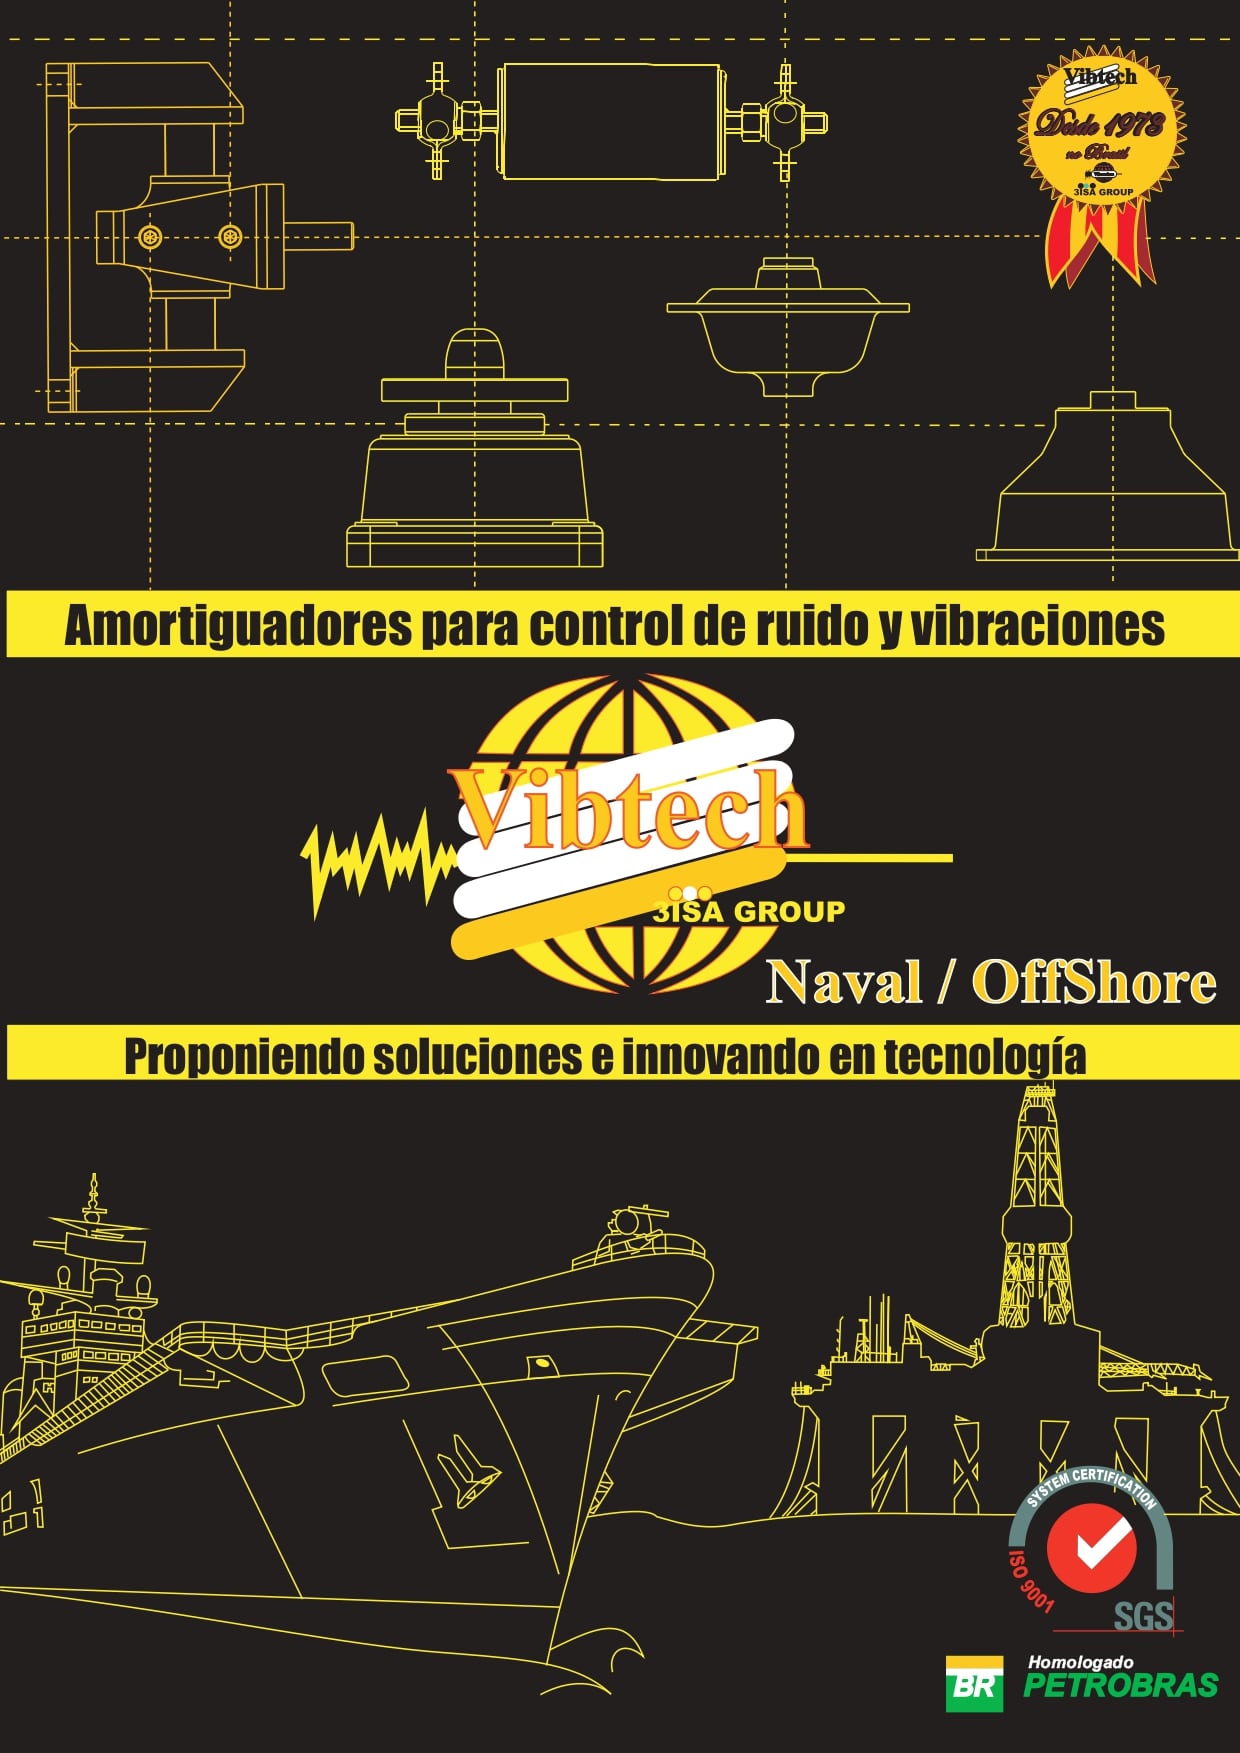 Naval - Offshore E